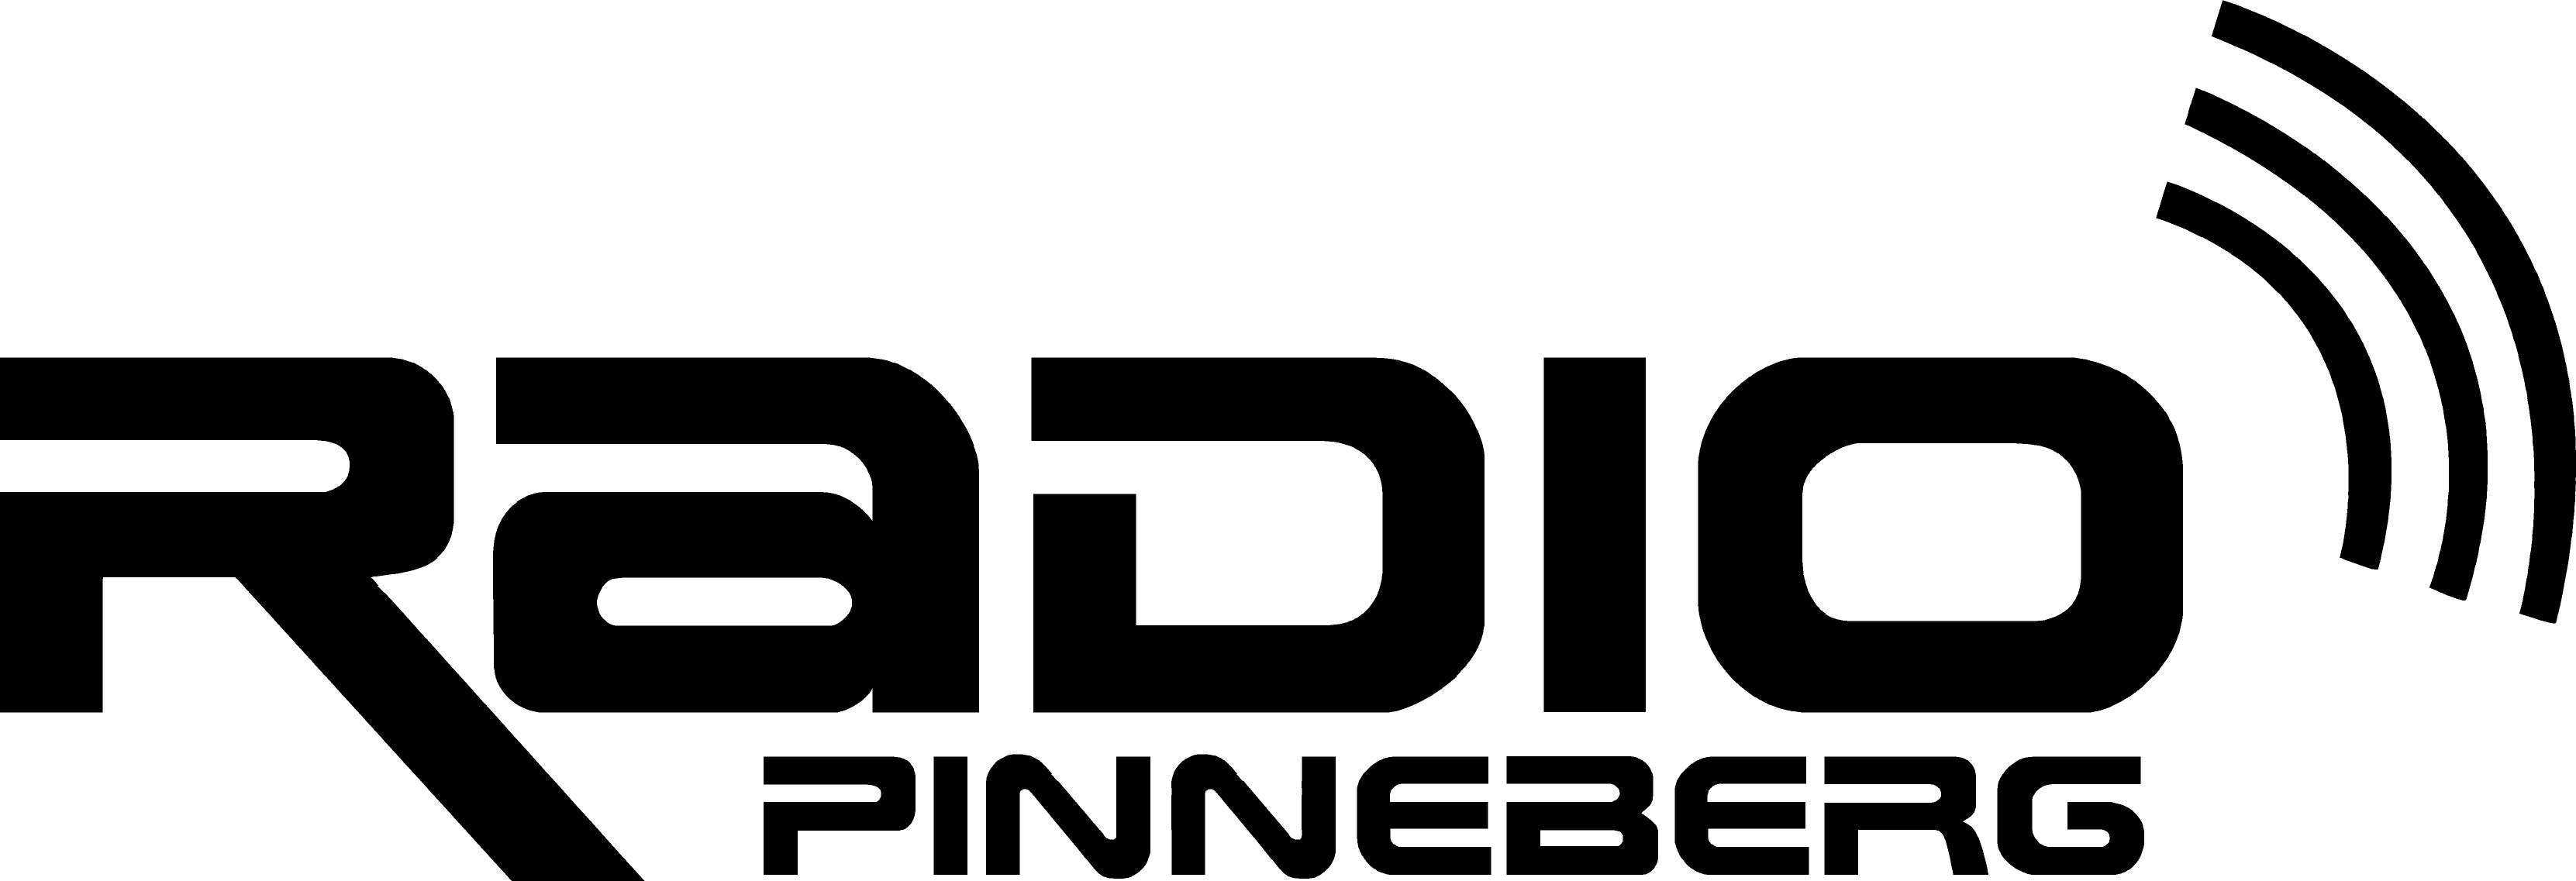 Pinneberg Radio Logo Wallpaper